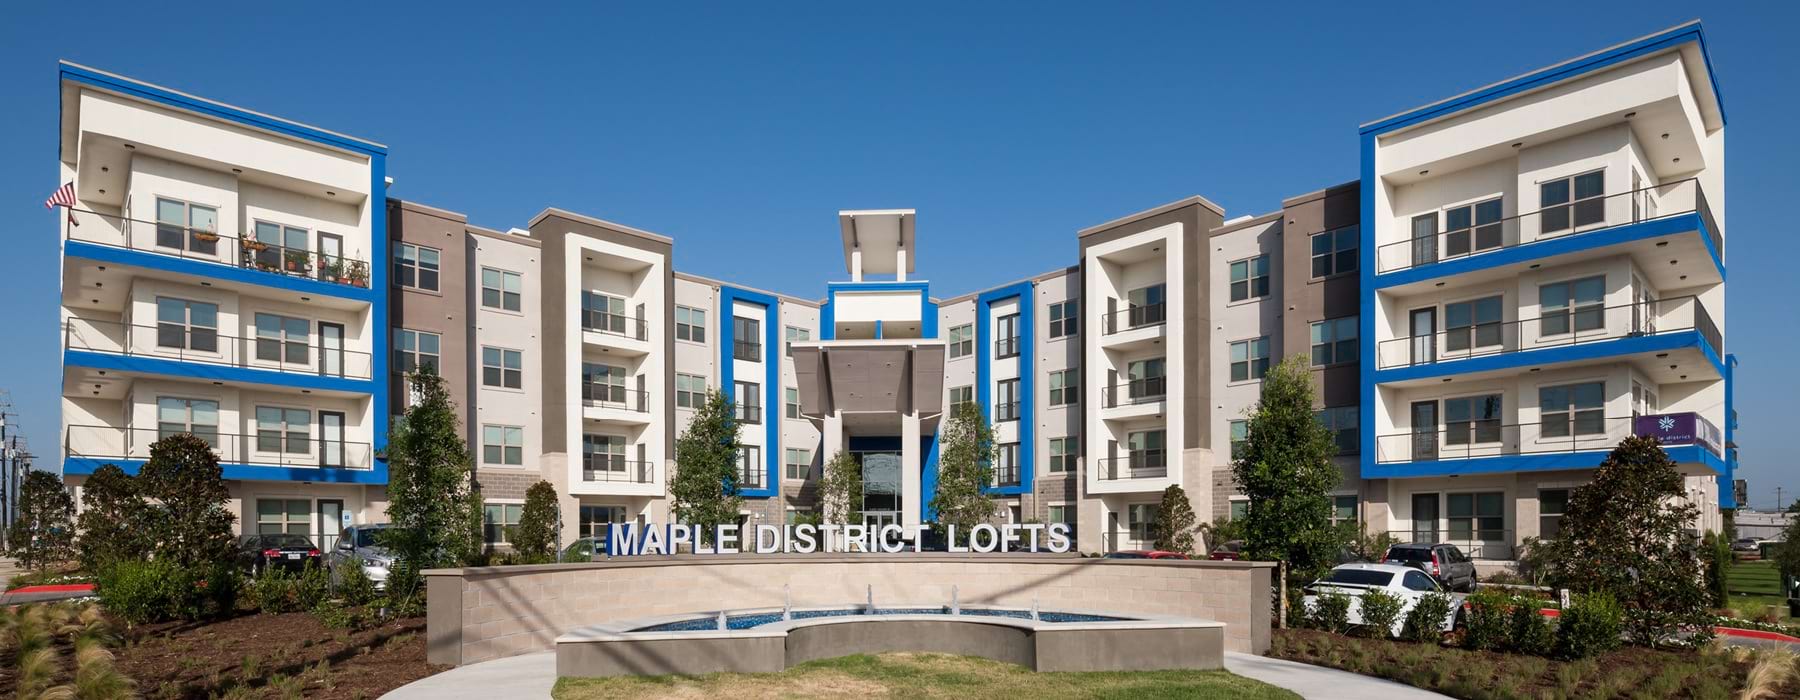 Maple District Lofts